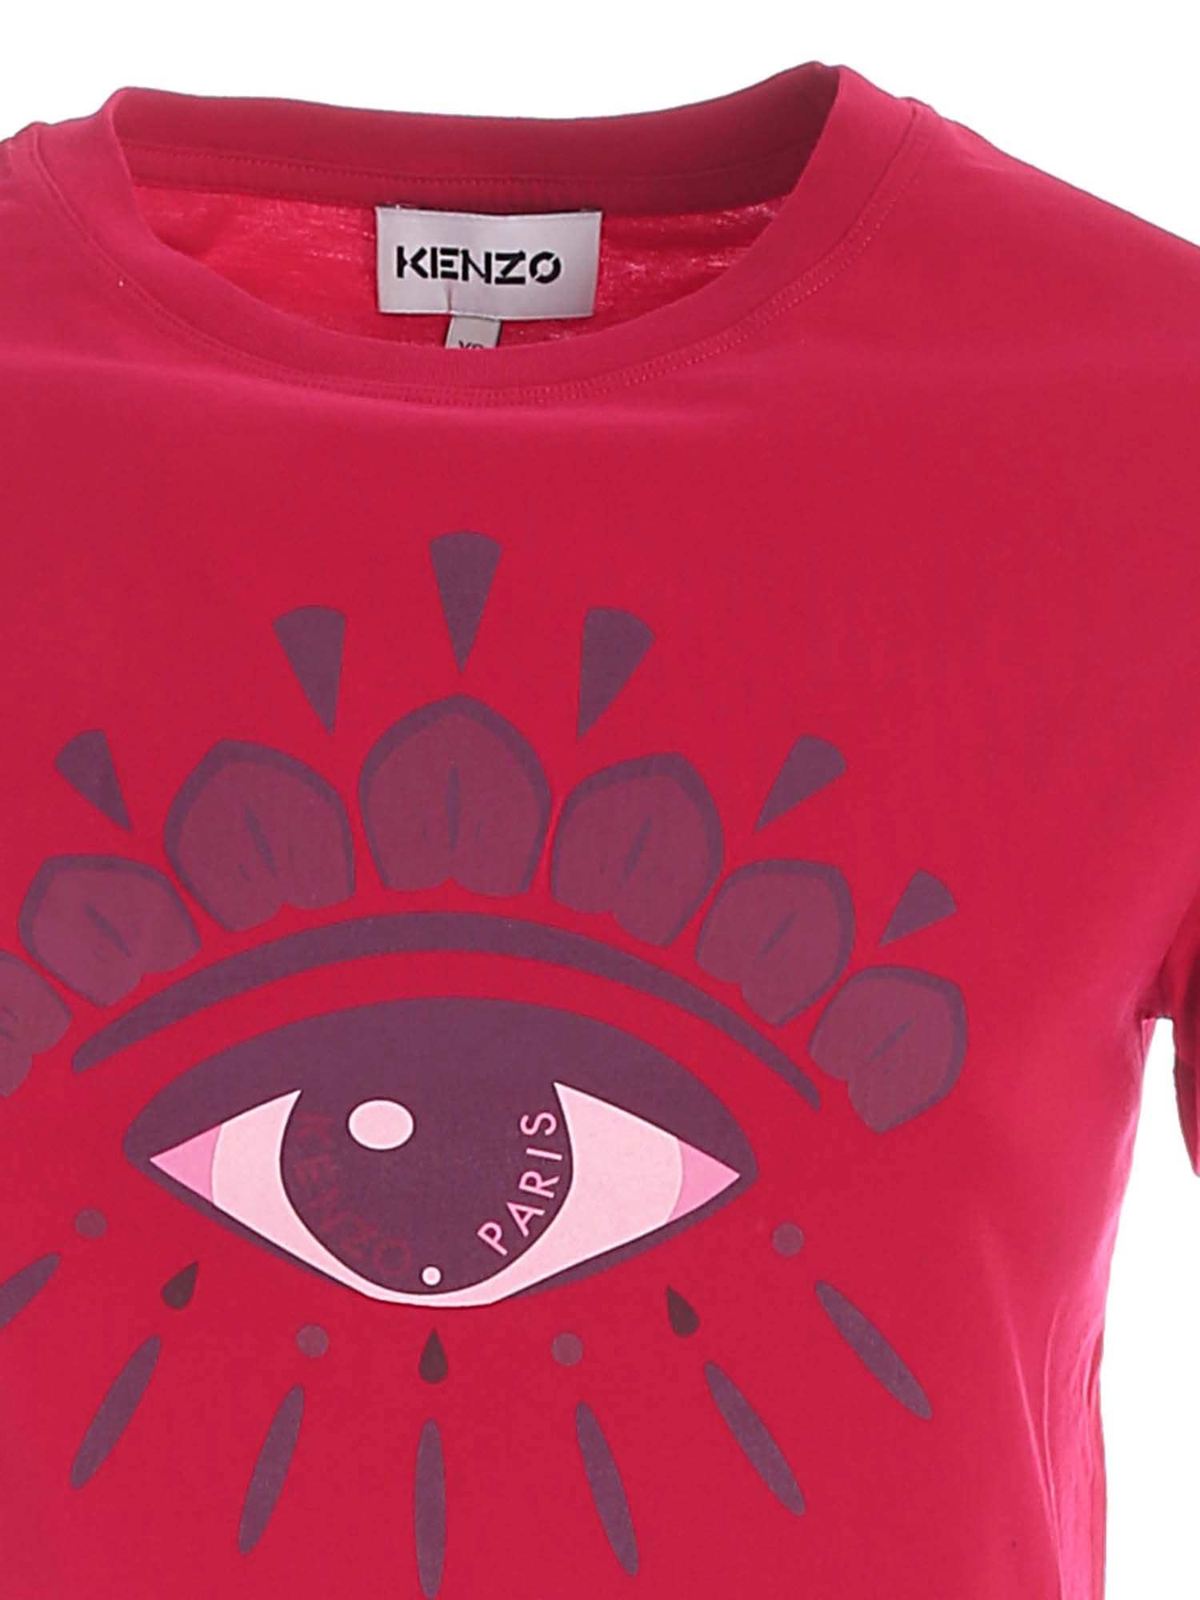 kenzo eye t shirt red